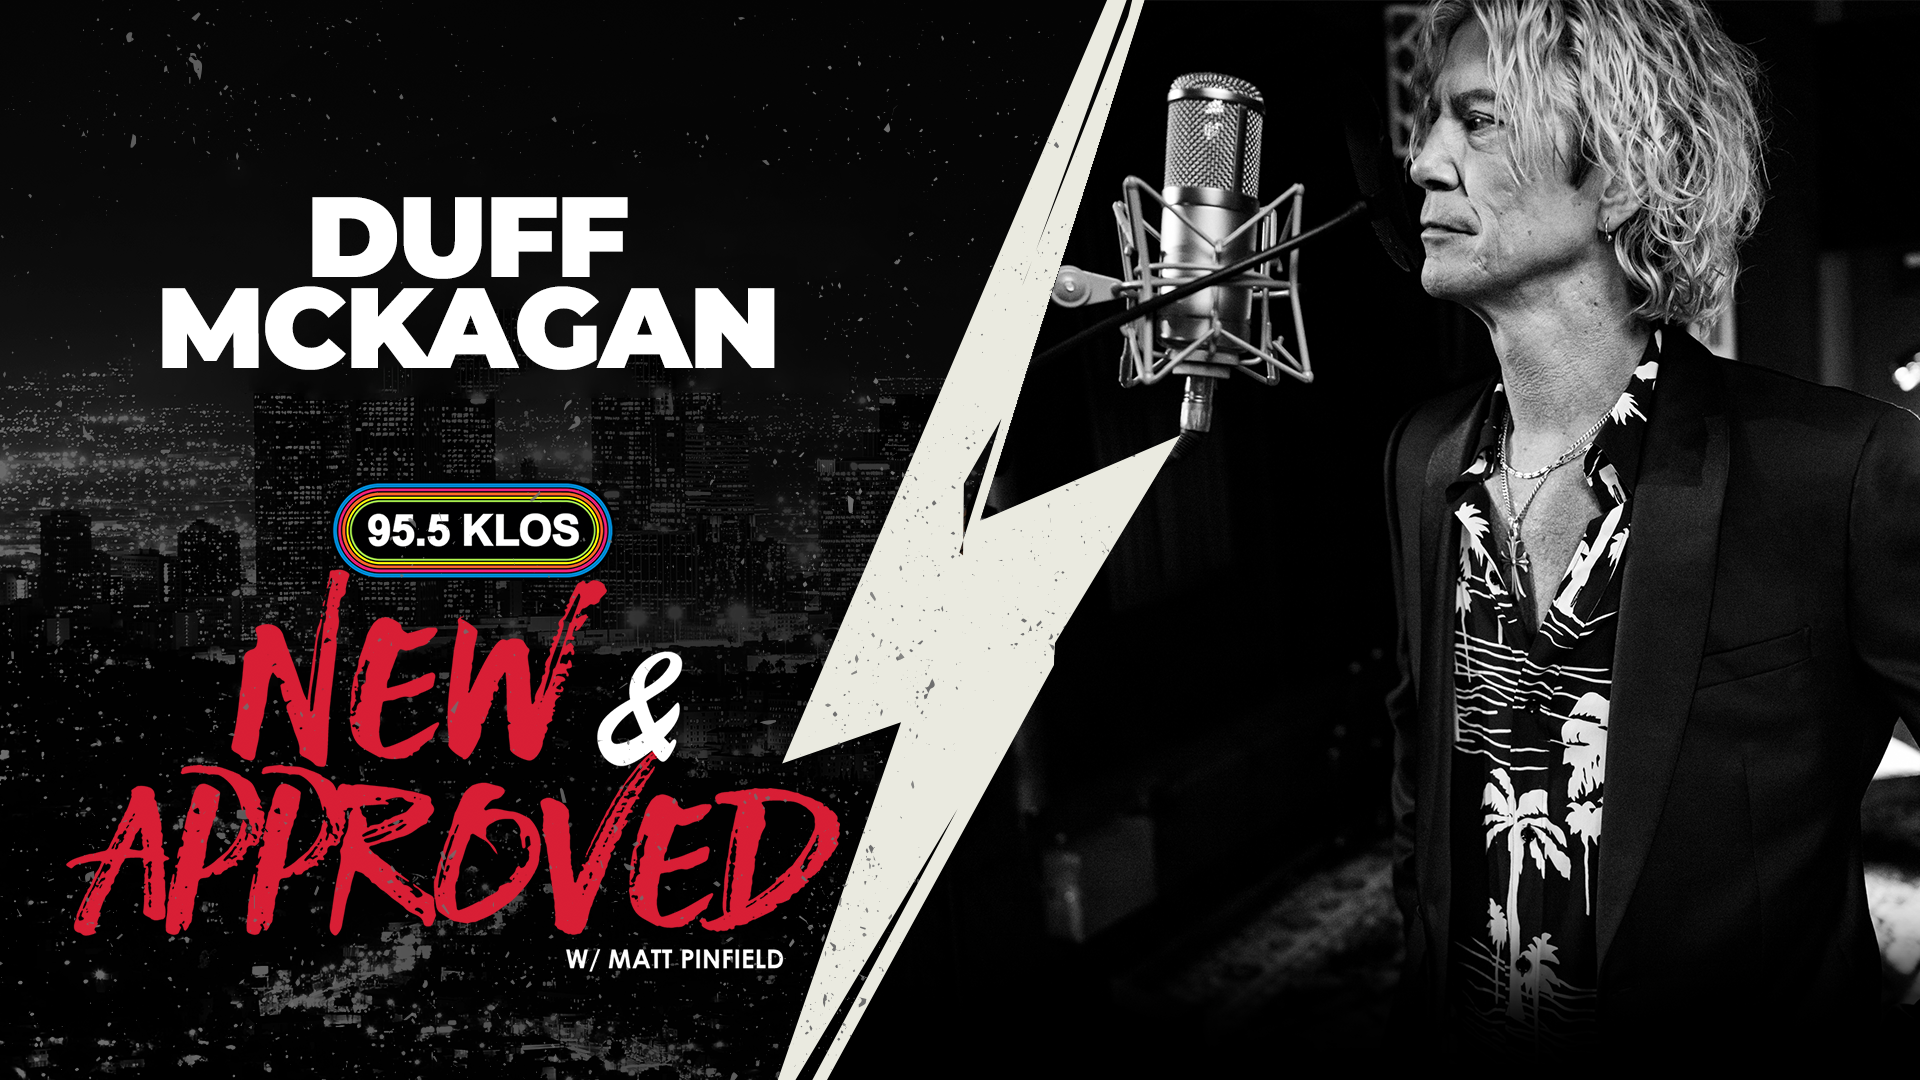 Duff McKagan Speaks With Matt Pinfield About Latest Album “Lighthouse”